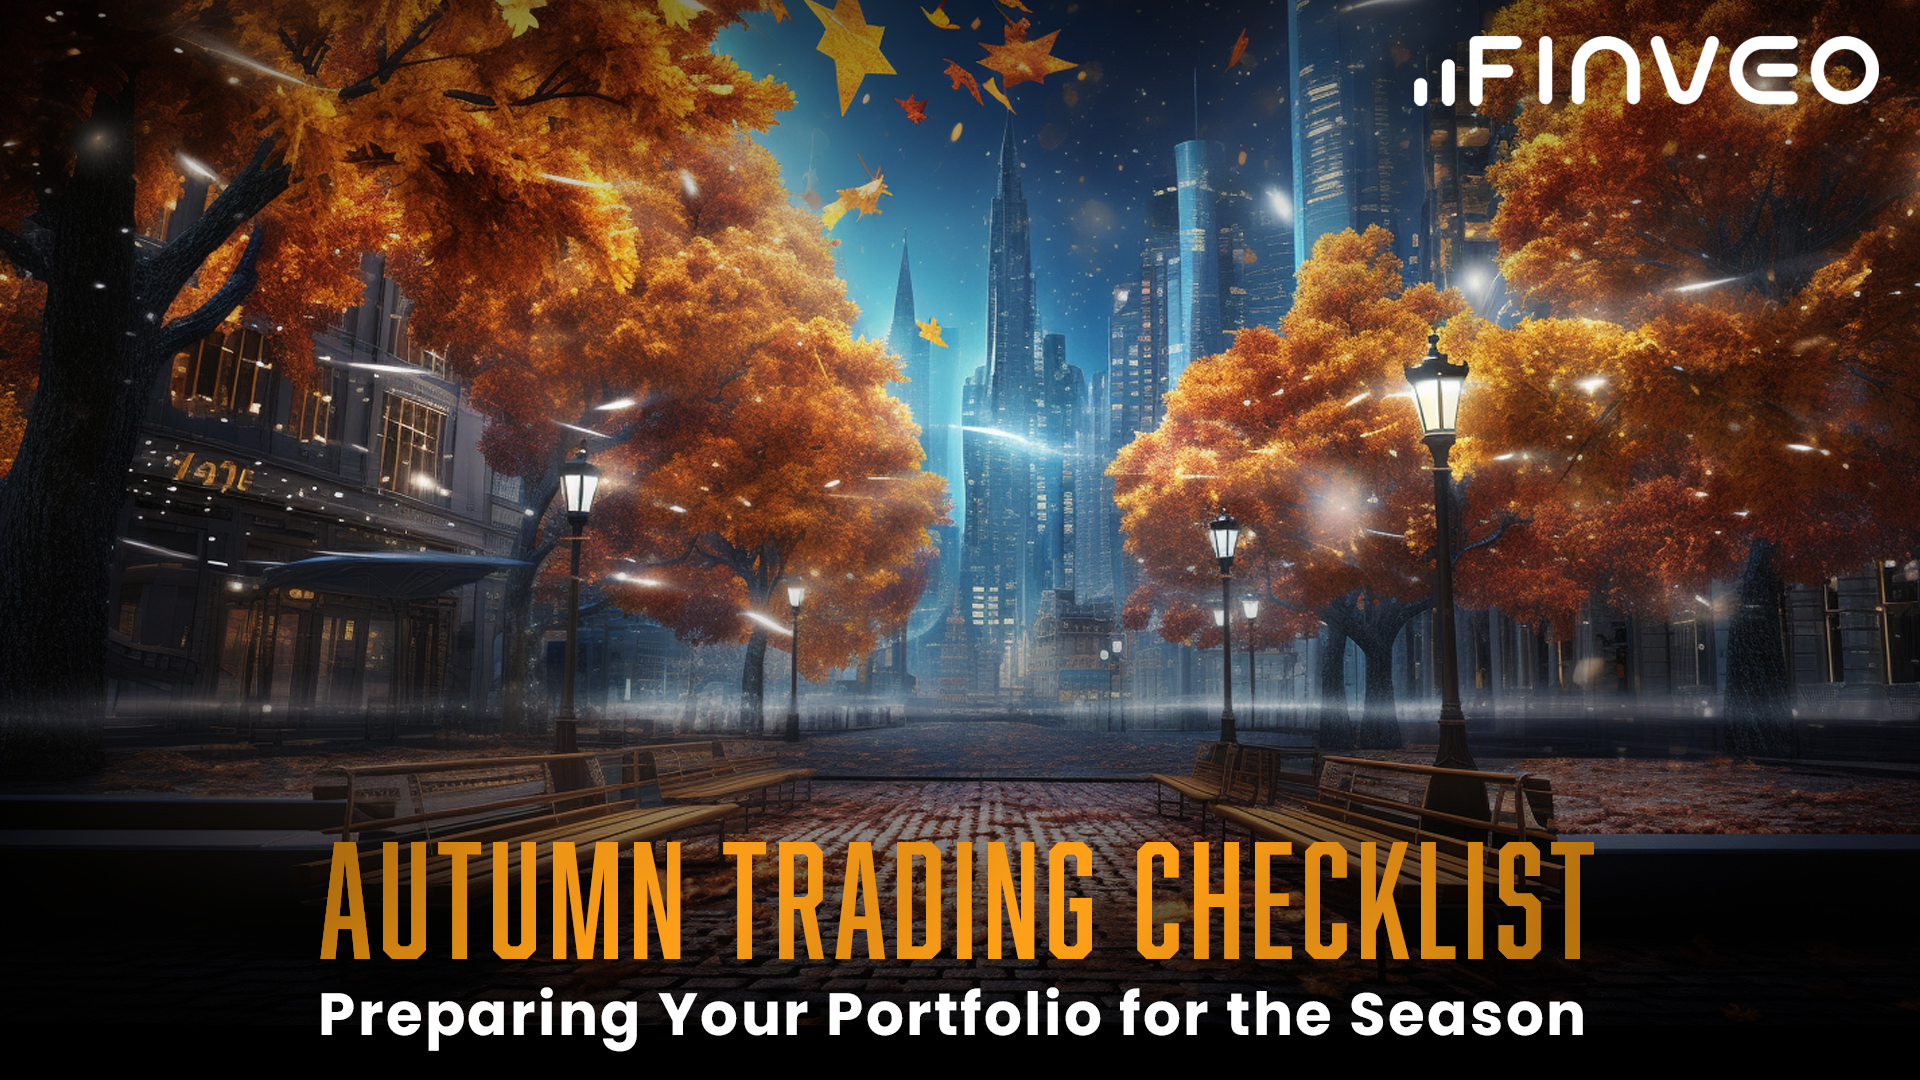 Autumn Trading Checklist: Preparing Your Portfolio for the Season